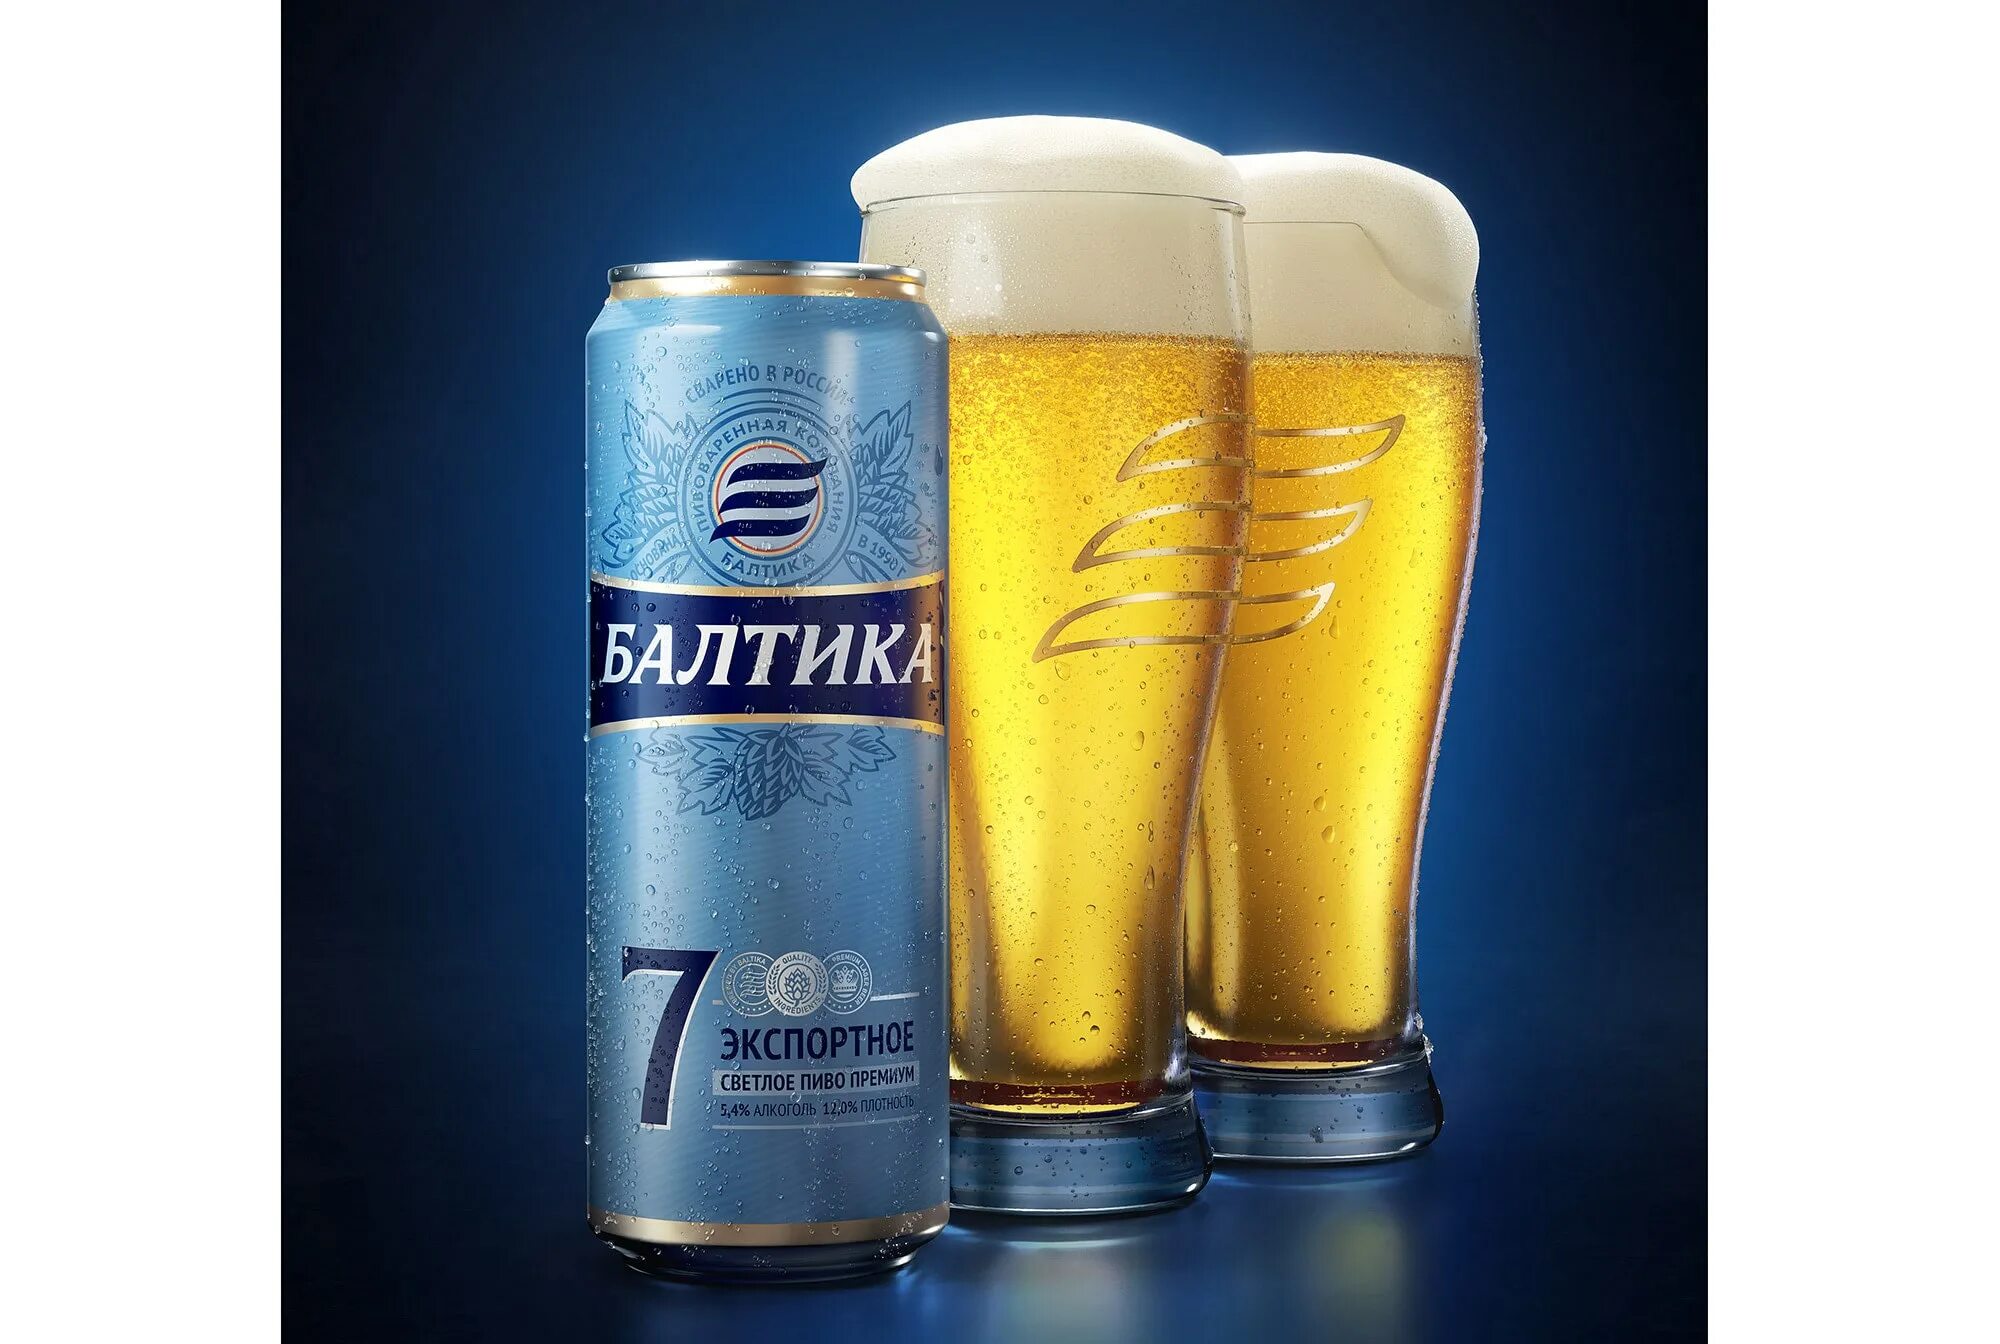 Пиво Балтика 7. Пиво Балтика семерка. Балтика 7 Экспортное премиум жб. Baltika 7 пиво.